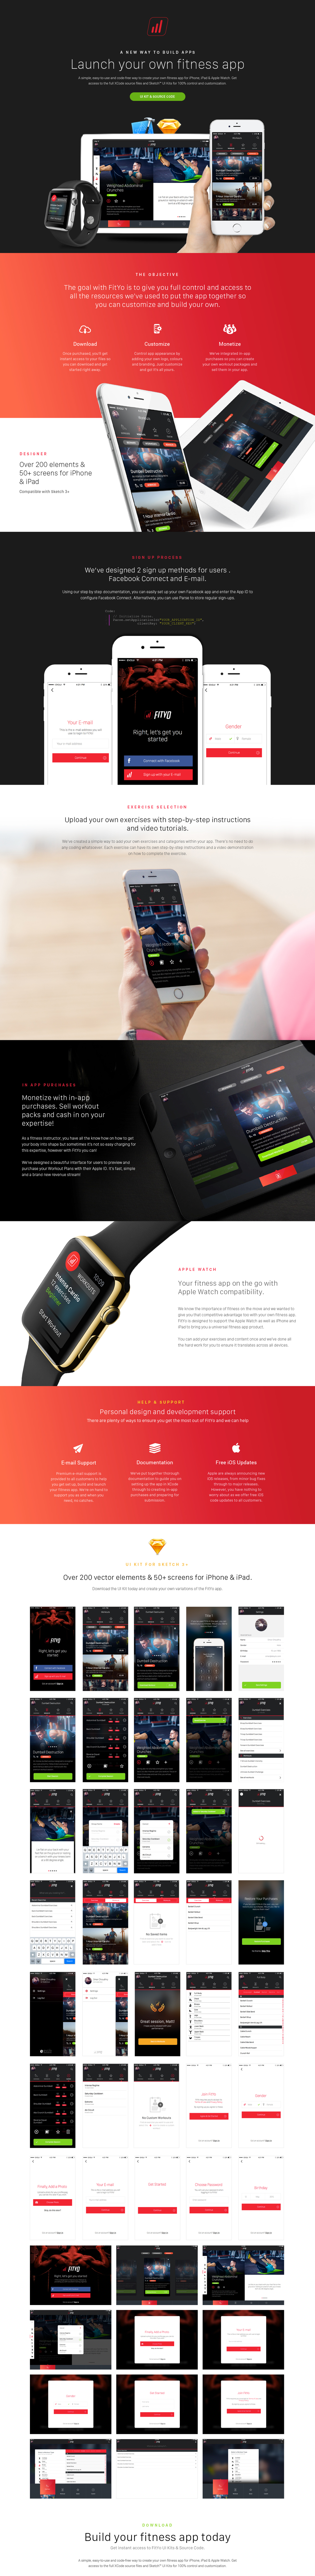 apple watch iphone app iPad App sketch resources ui kit app design user interface user experience